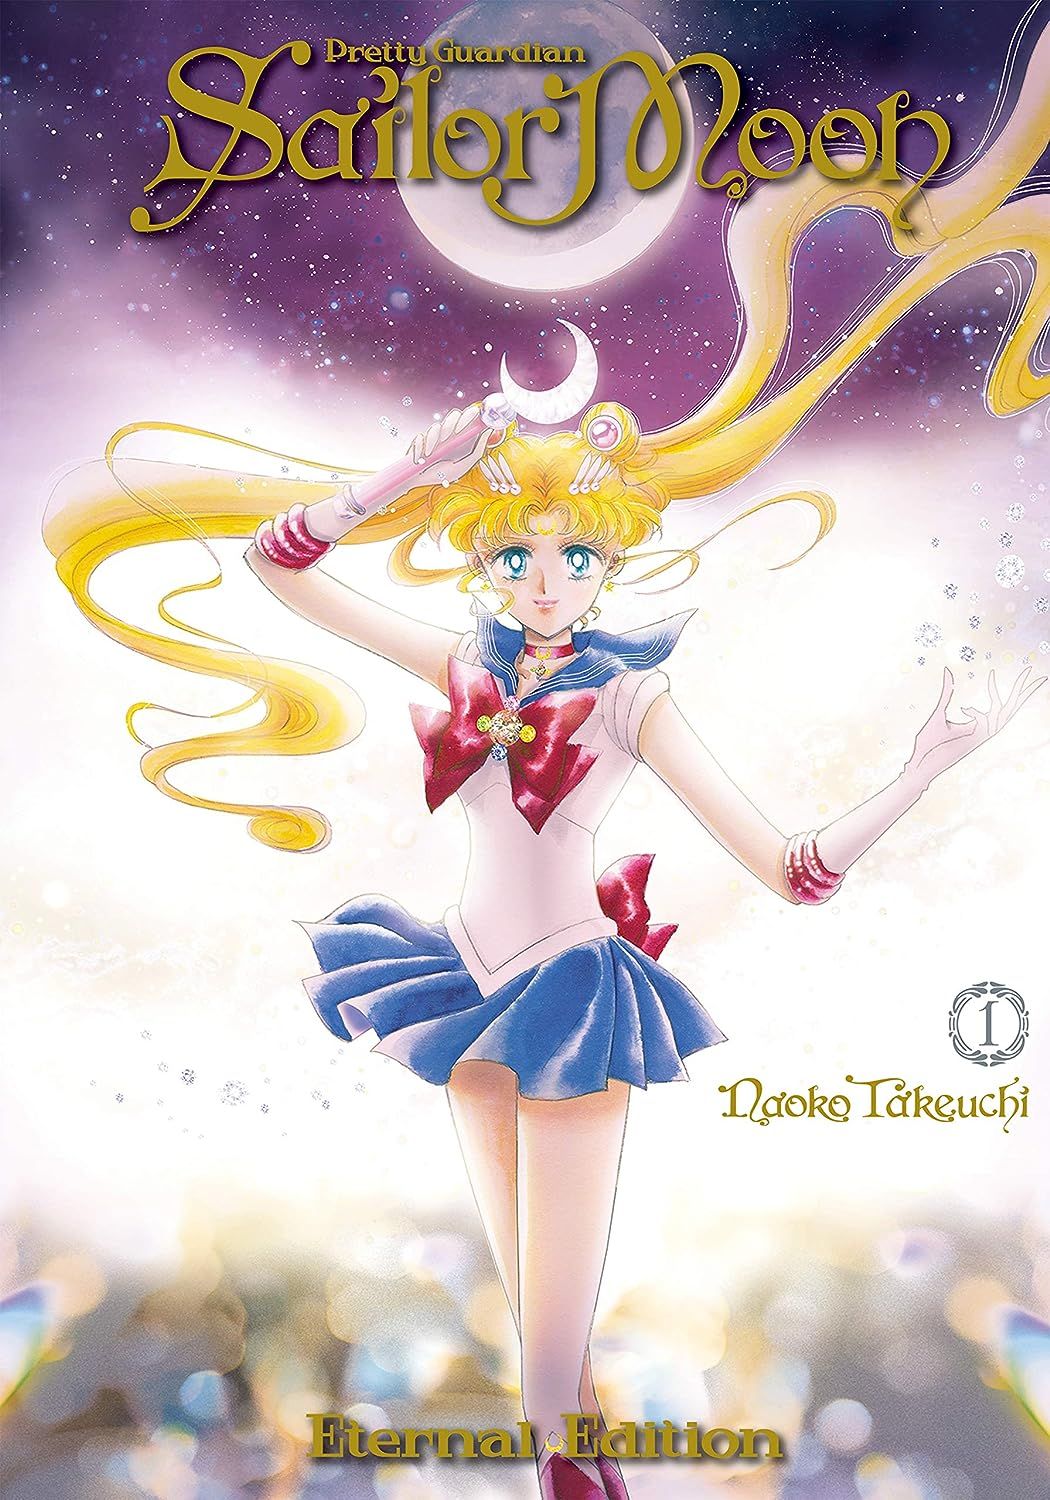 Sailor Moon by Naoko Takeuchi cover